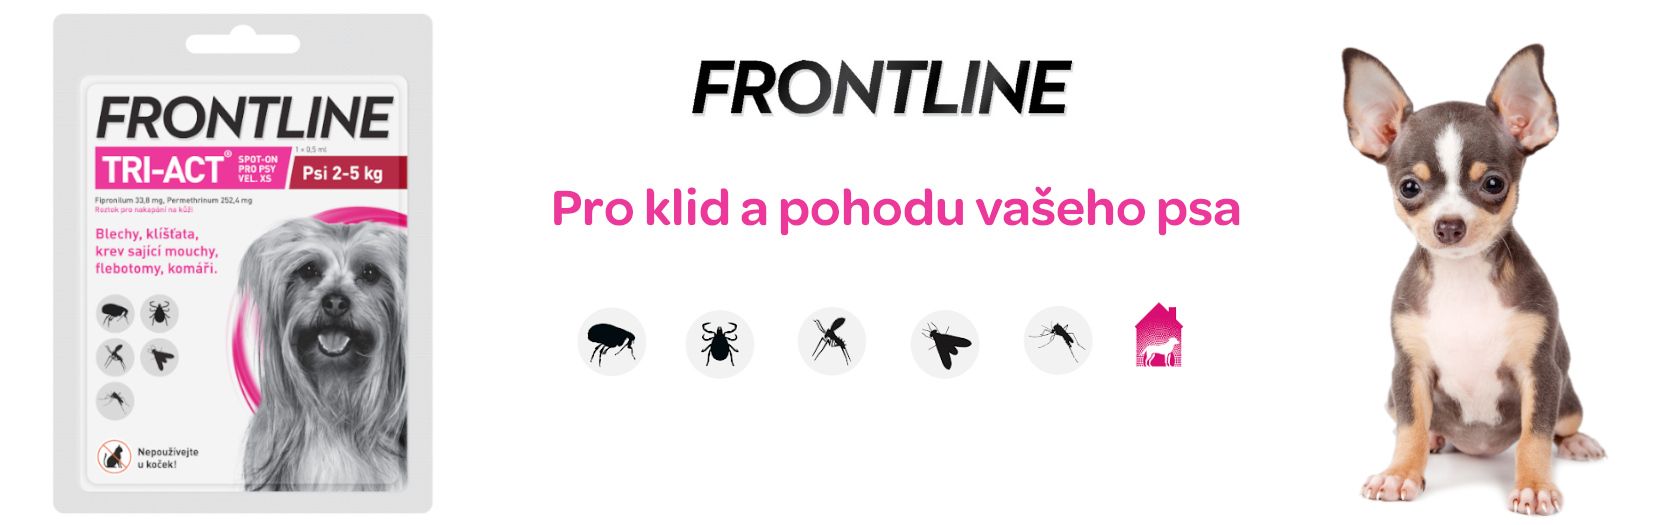 Frontline Tri-Act psi 2-5kg spot-on 1x1 pipeta